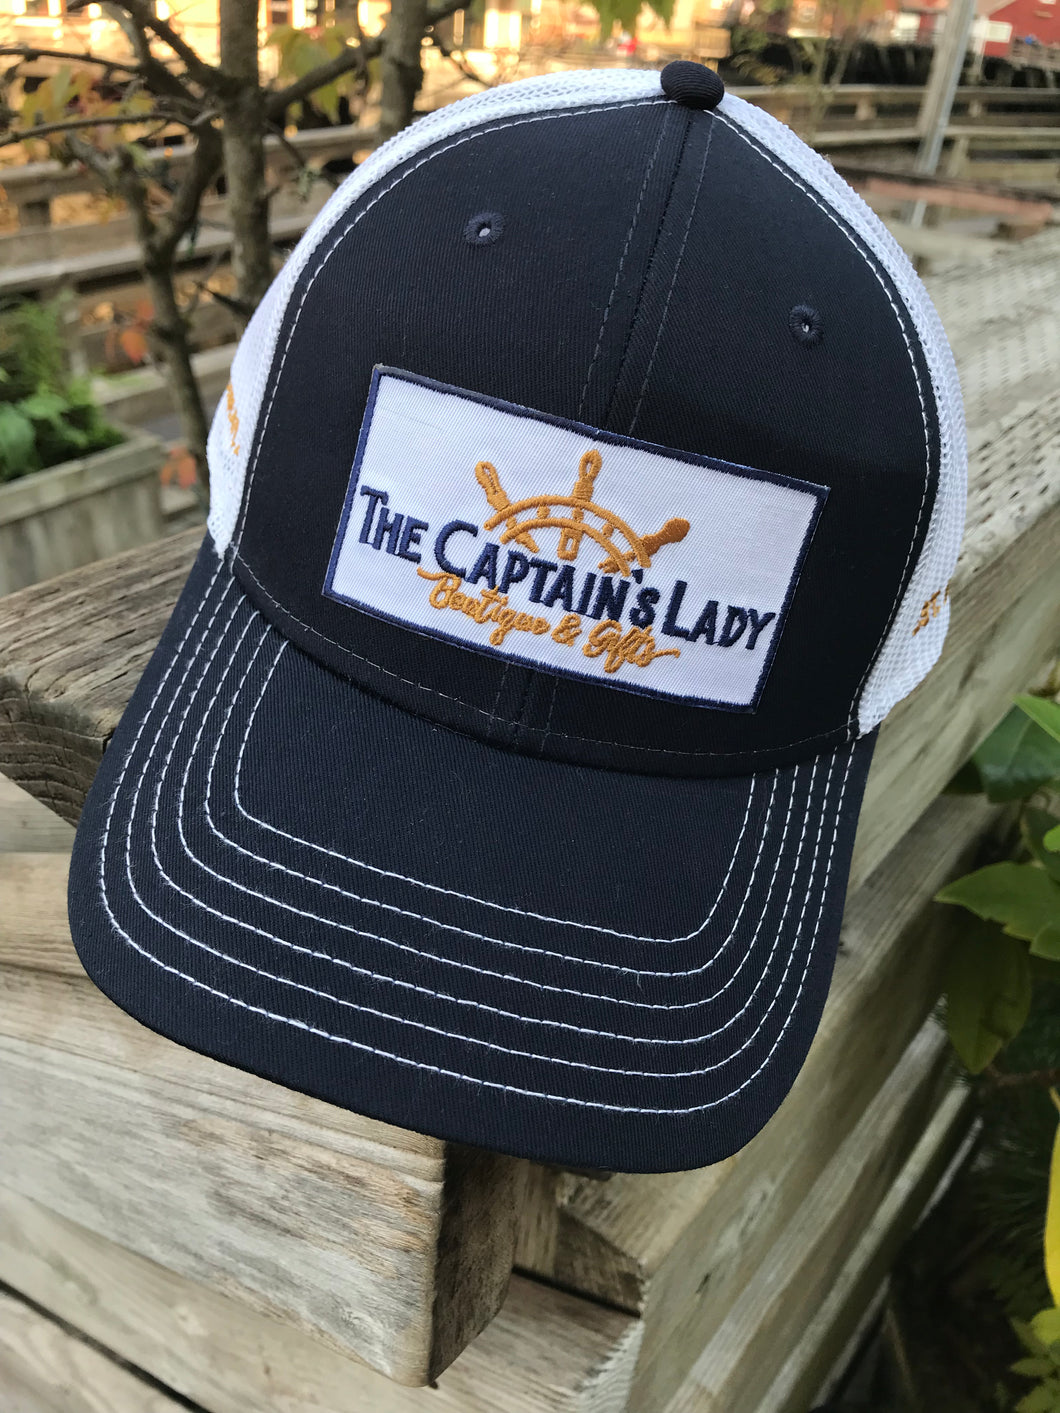 The Captain's Lady Logo ball cap